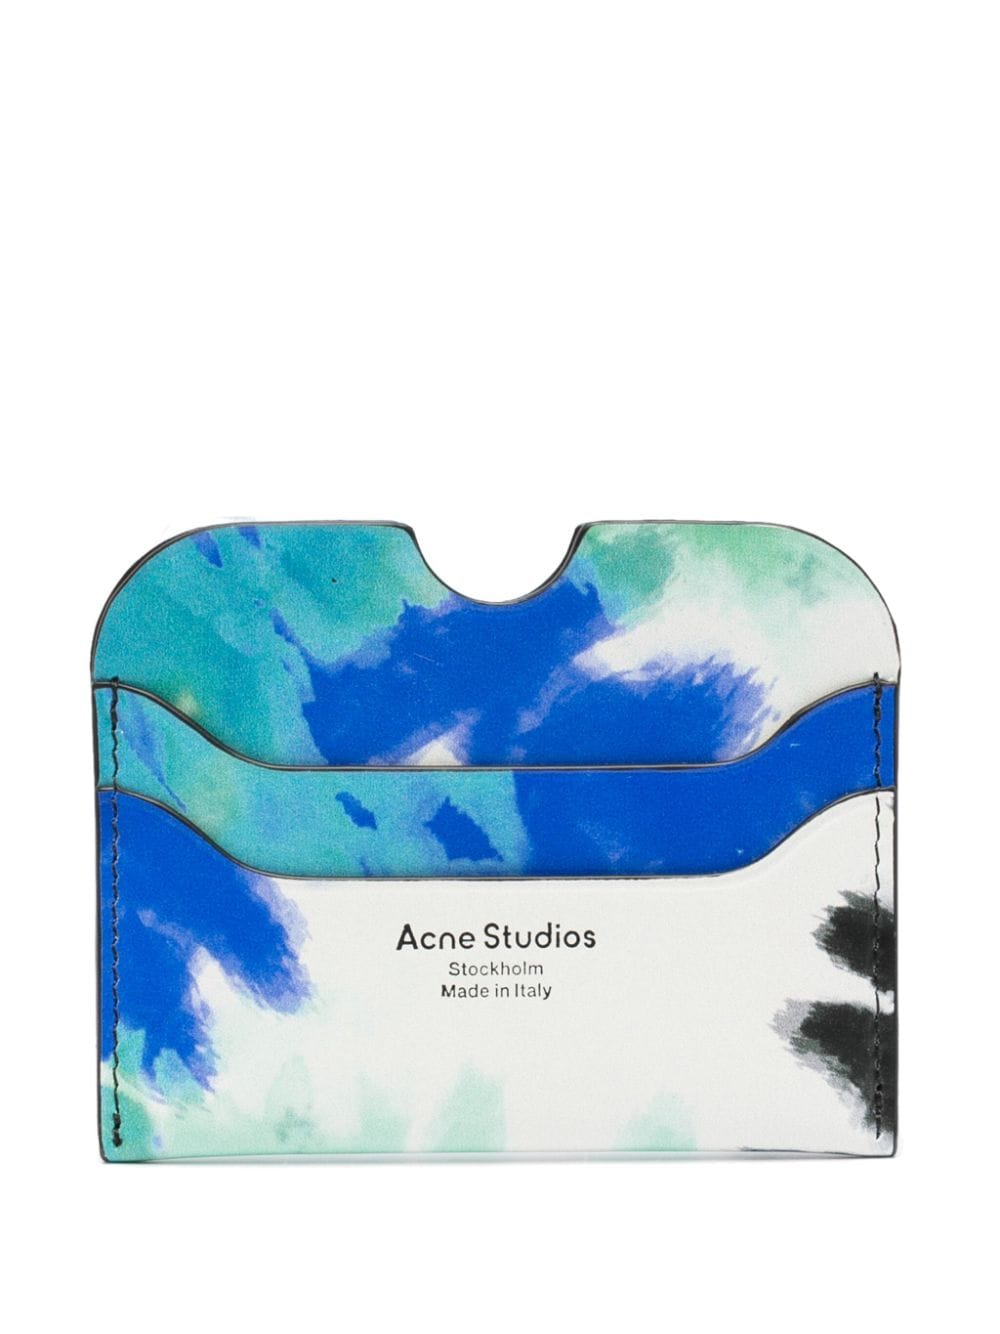 Acne Studios tie-dye print leather cardholder - Blue von Acne Studios